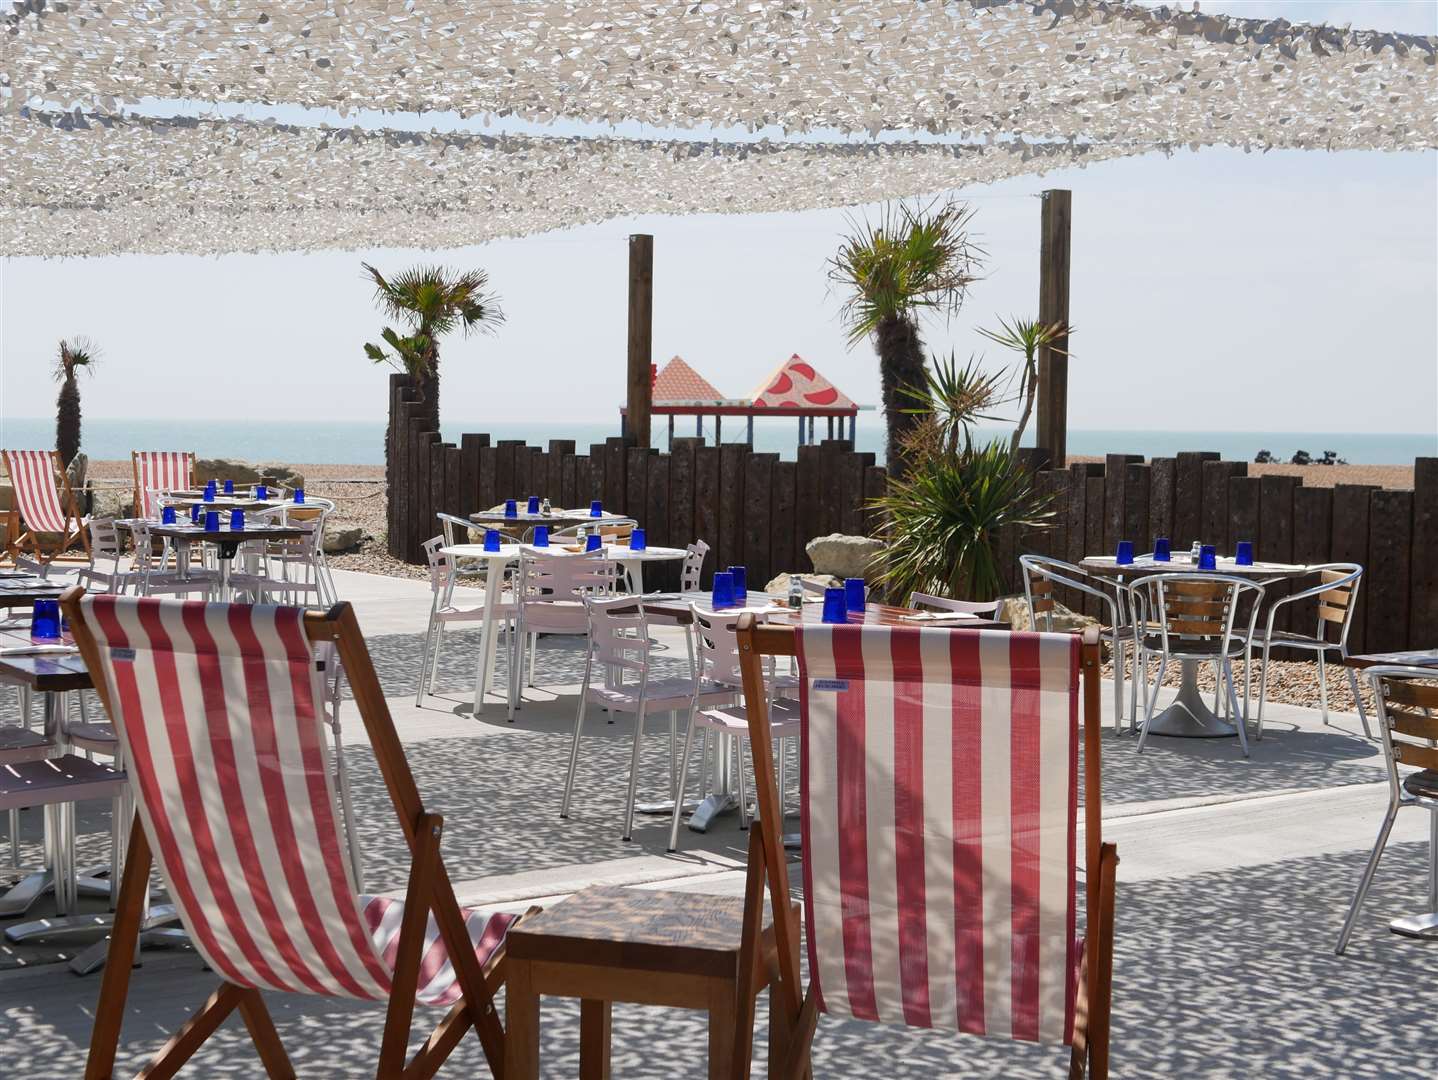 Little Rock seafood restaurant has opened at Beachside in Folkestone. Photo: Rocksalt